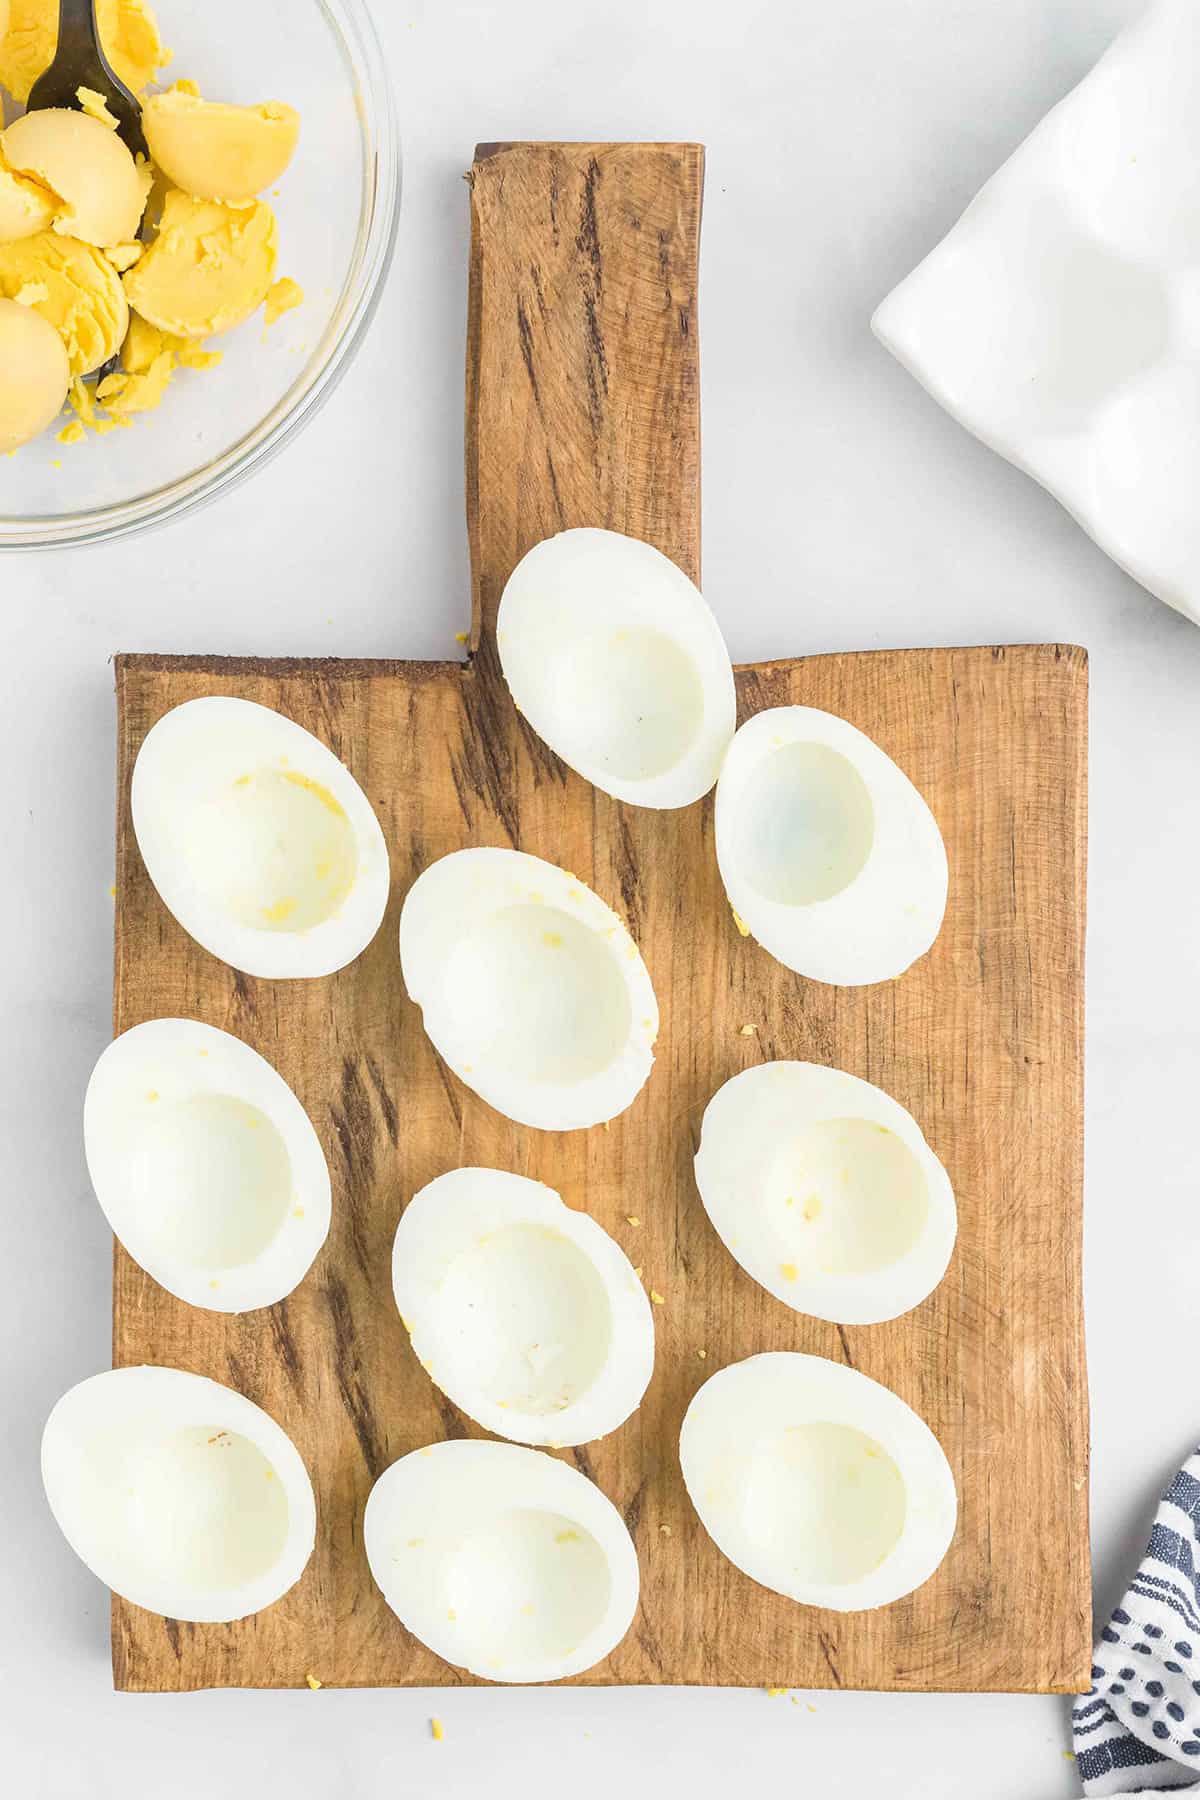 Egg white halves on a wooden board.